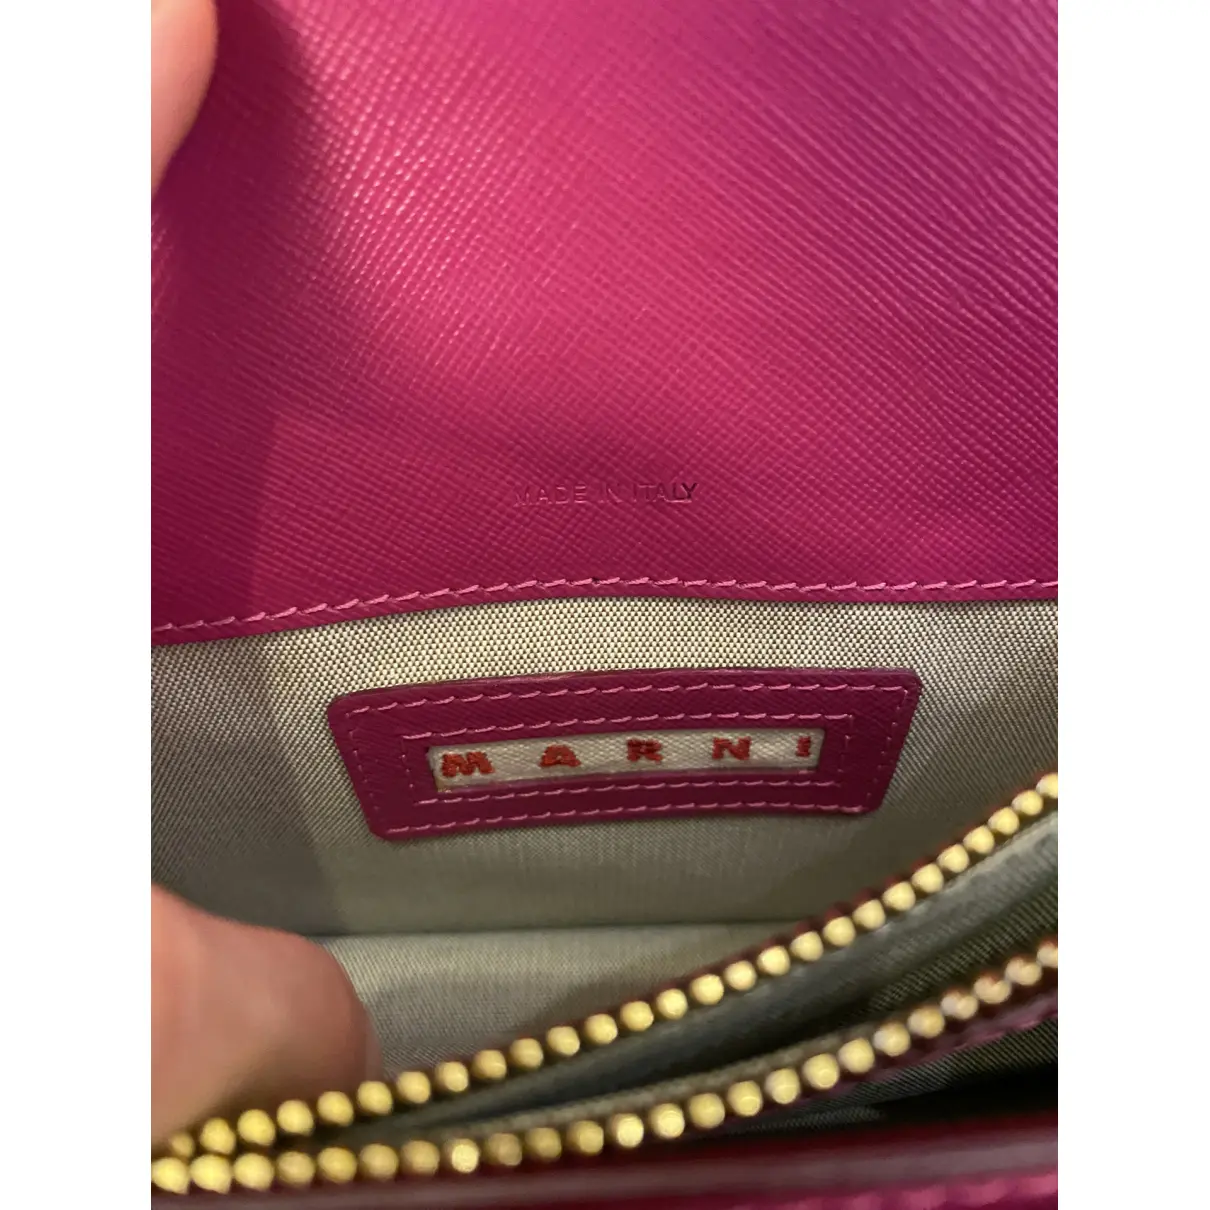 Buy Marni Trunk glitter satchel online